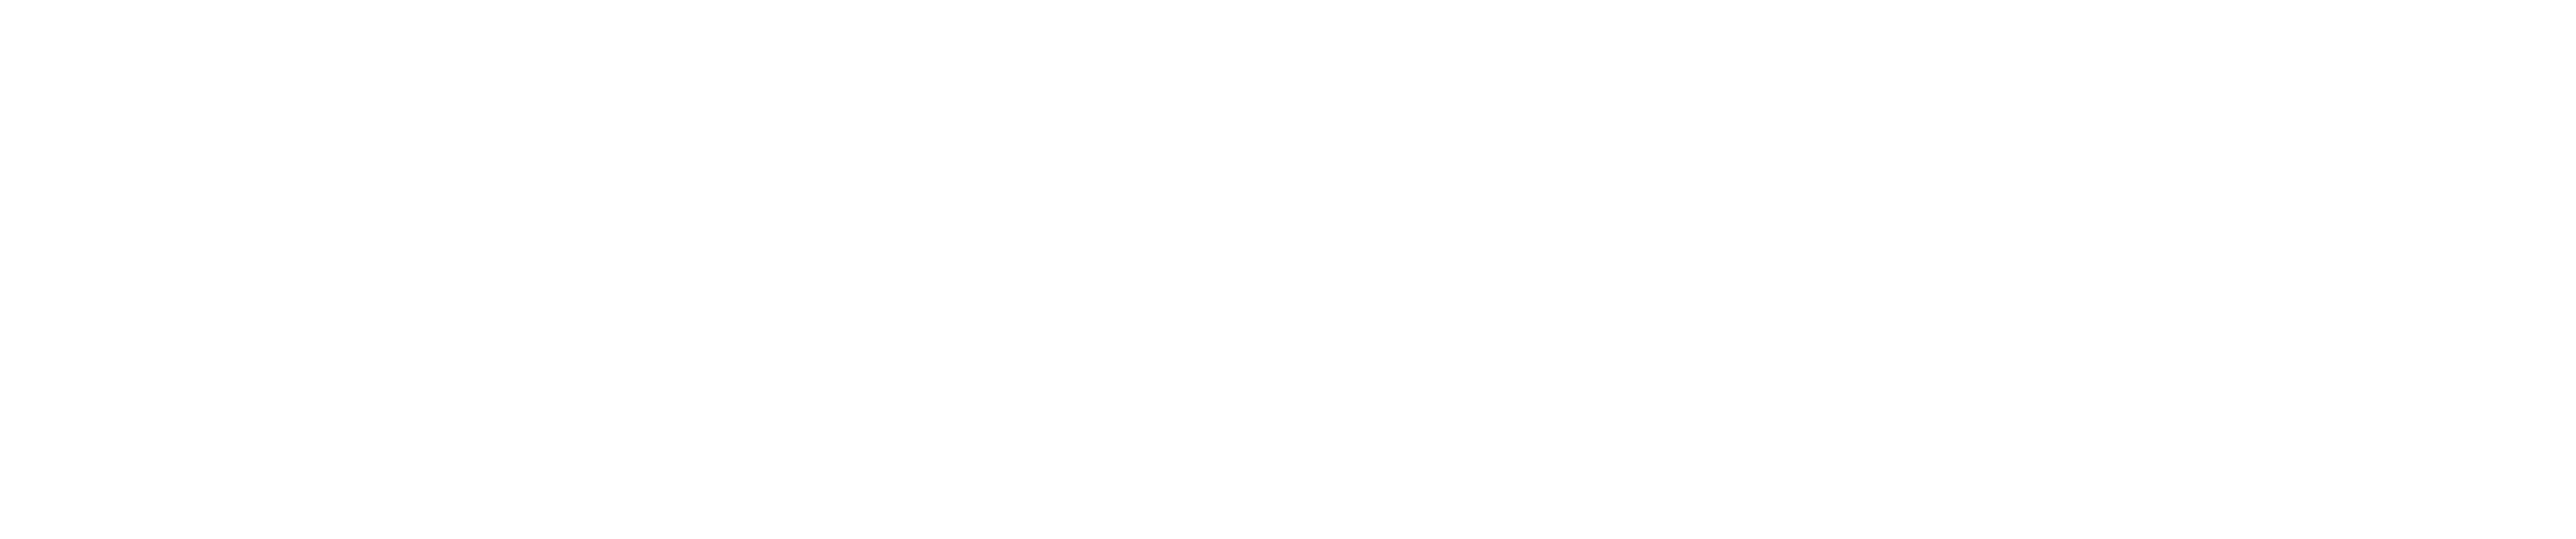 Mobaro-energy_Logo_RGB-white.png